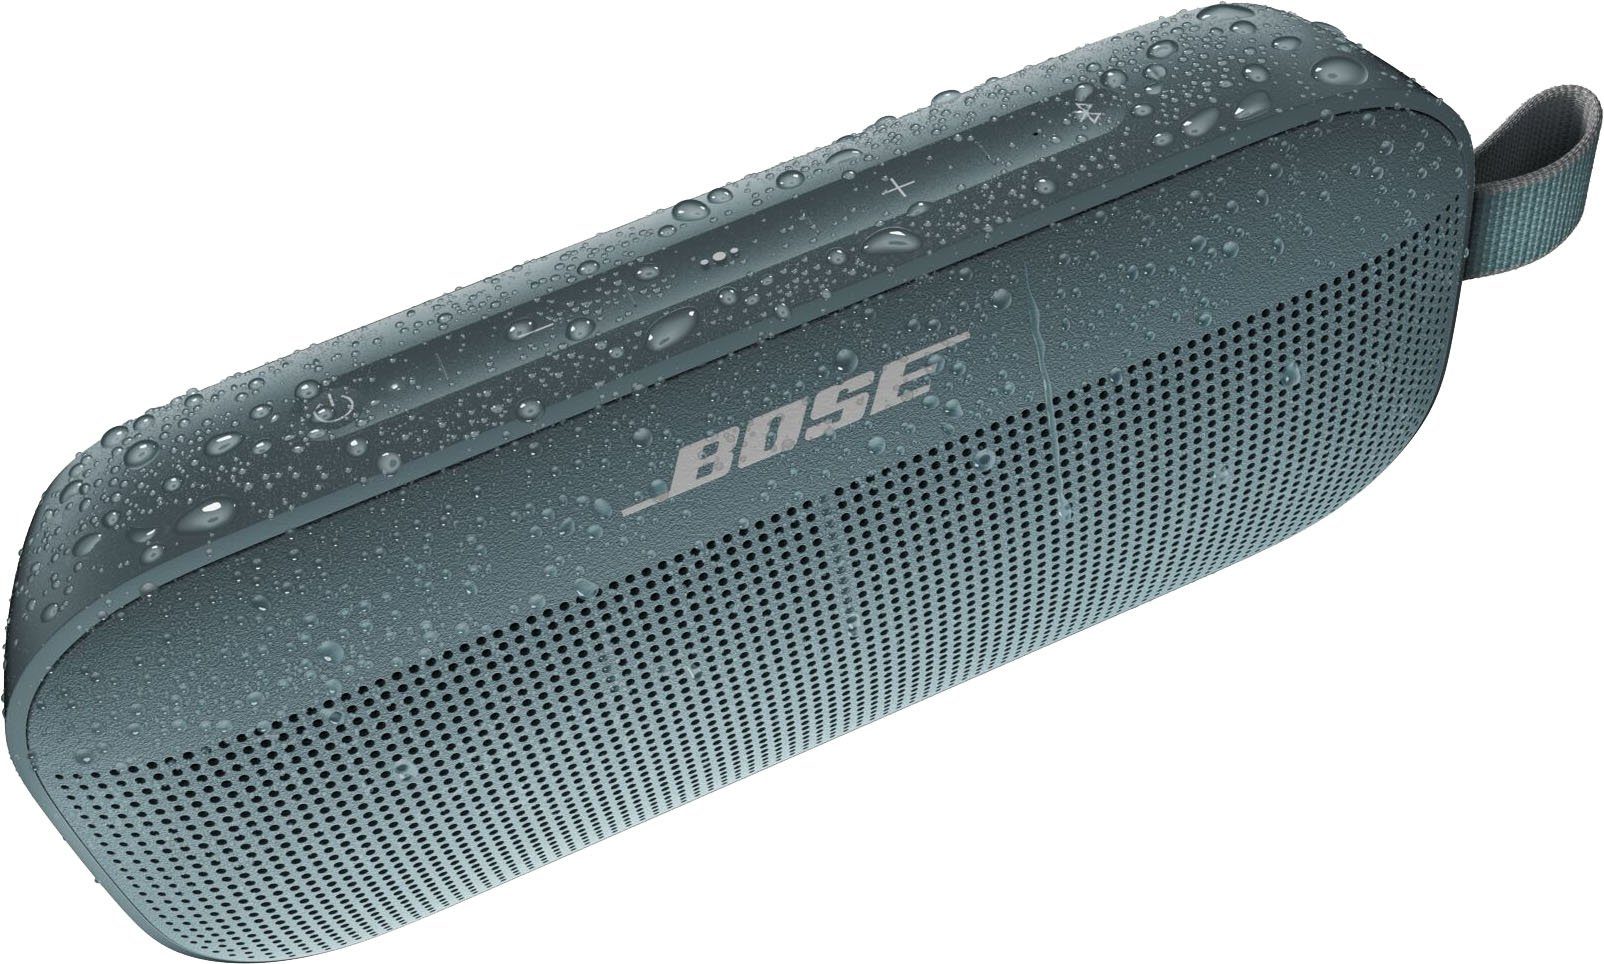 Lautsprecher Stereo blau Bose Flex (Bluetooth) SoundLink